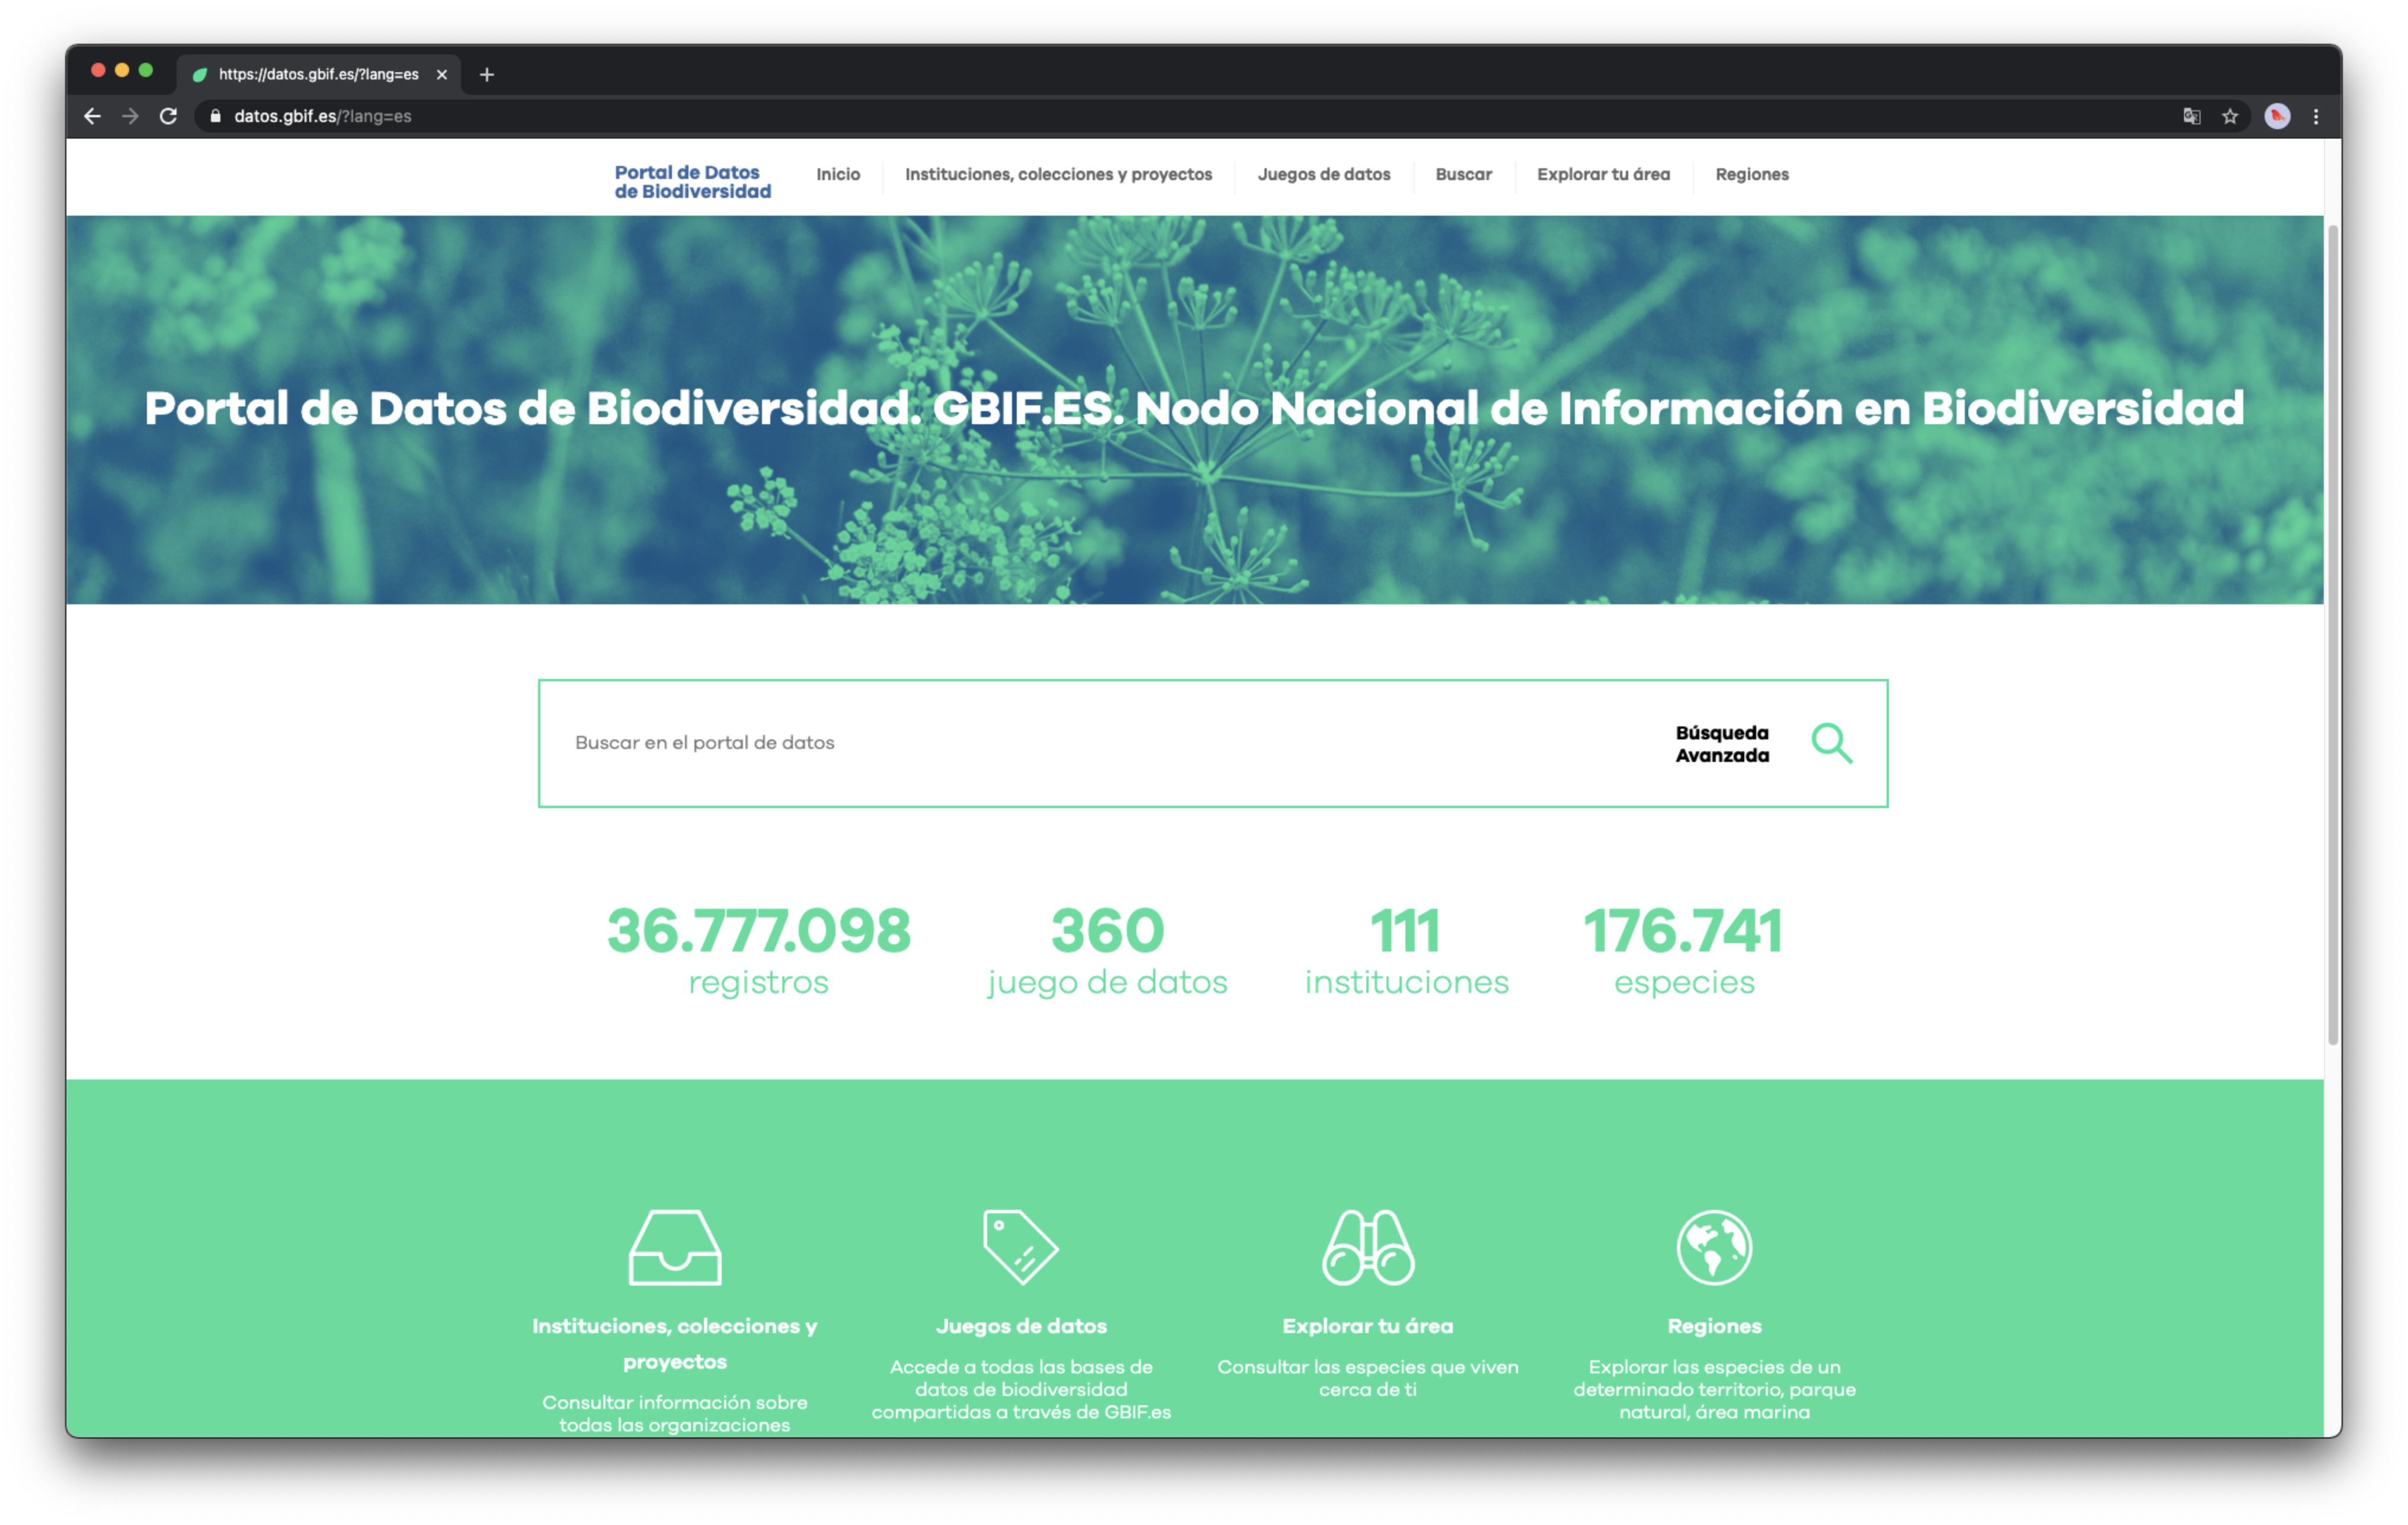 GBIF.es Biodiversity data portal